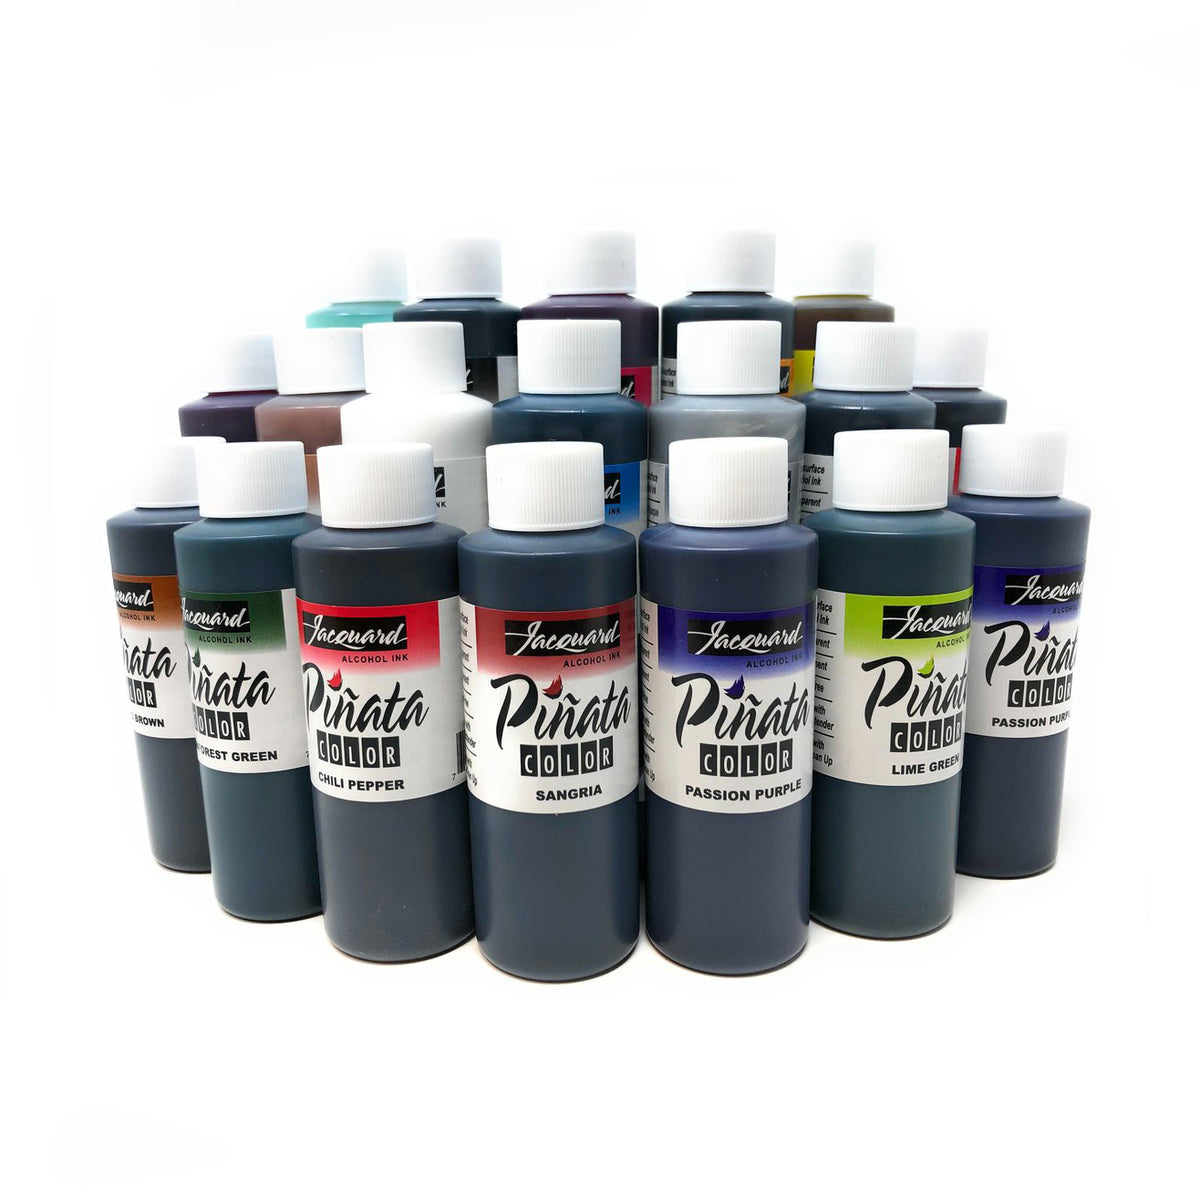 Jacquard Pinata Color Alcohol Inks 118.29ml – DIY Invasion